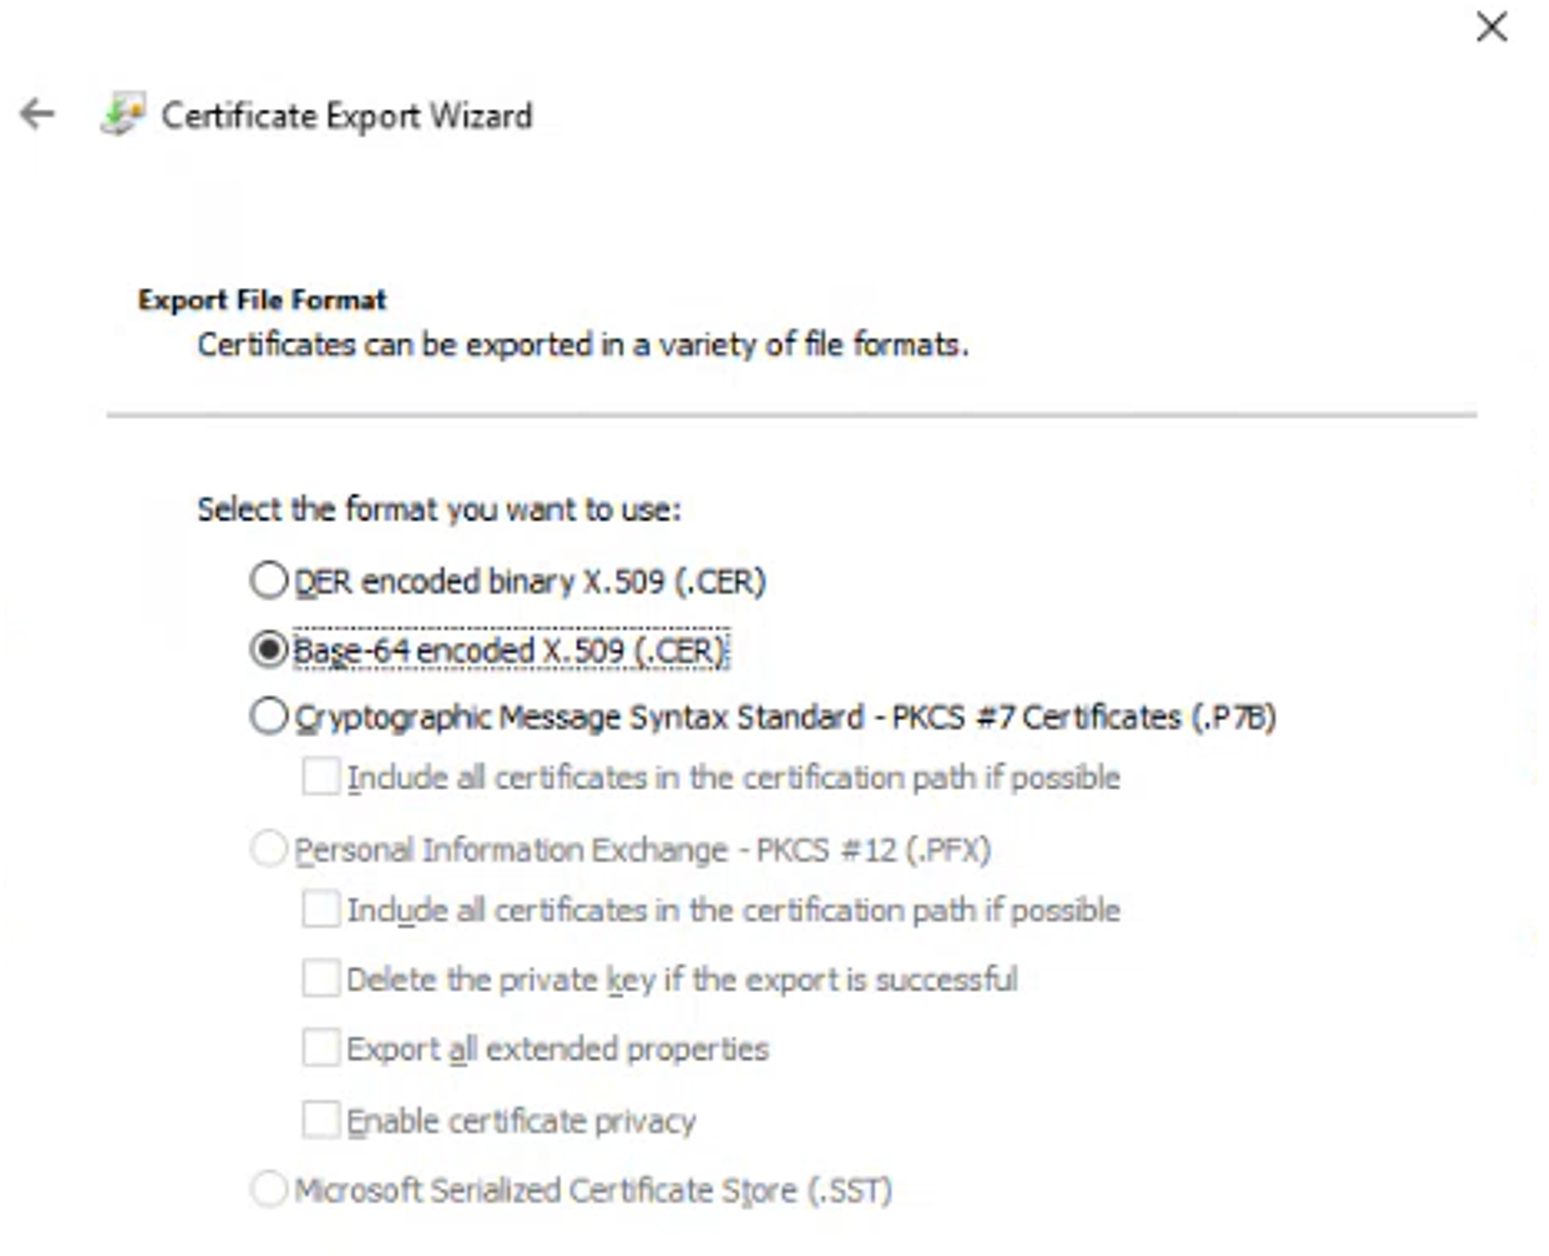 AAD_-_Certificate_requirements_export_wizard_base-64_2.png